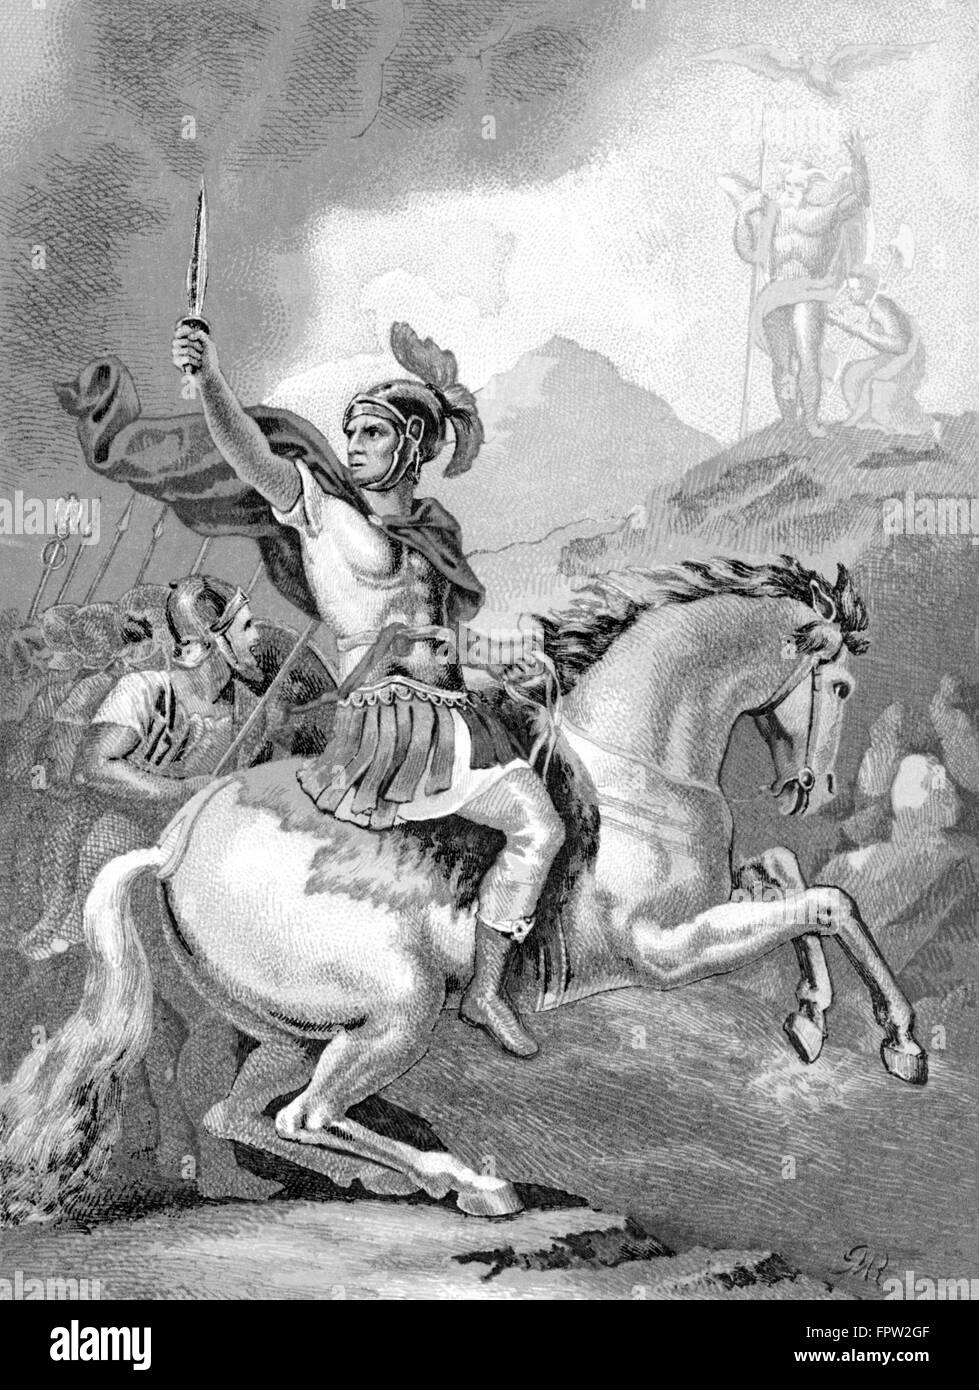 49 BC DEFIANT DECISIVE JULIUS CAESAR IRREVERSIBLY CROSSING RUBICON RIVER ON WAR HORSE WAVING SWORD LEADING ROMAN ARMY Stock Photo